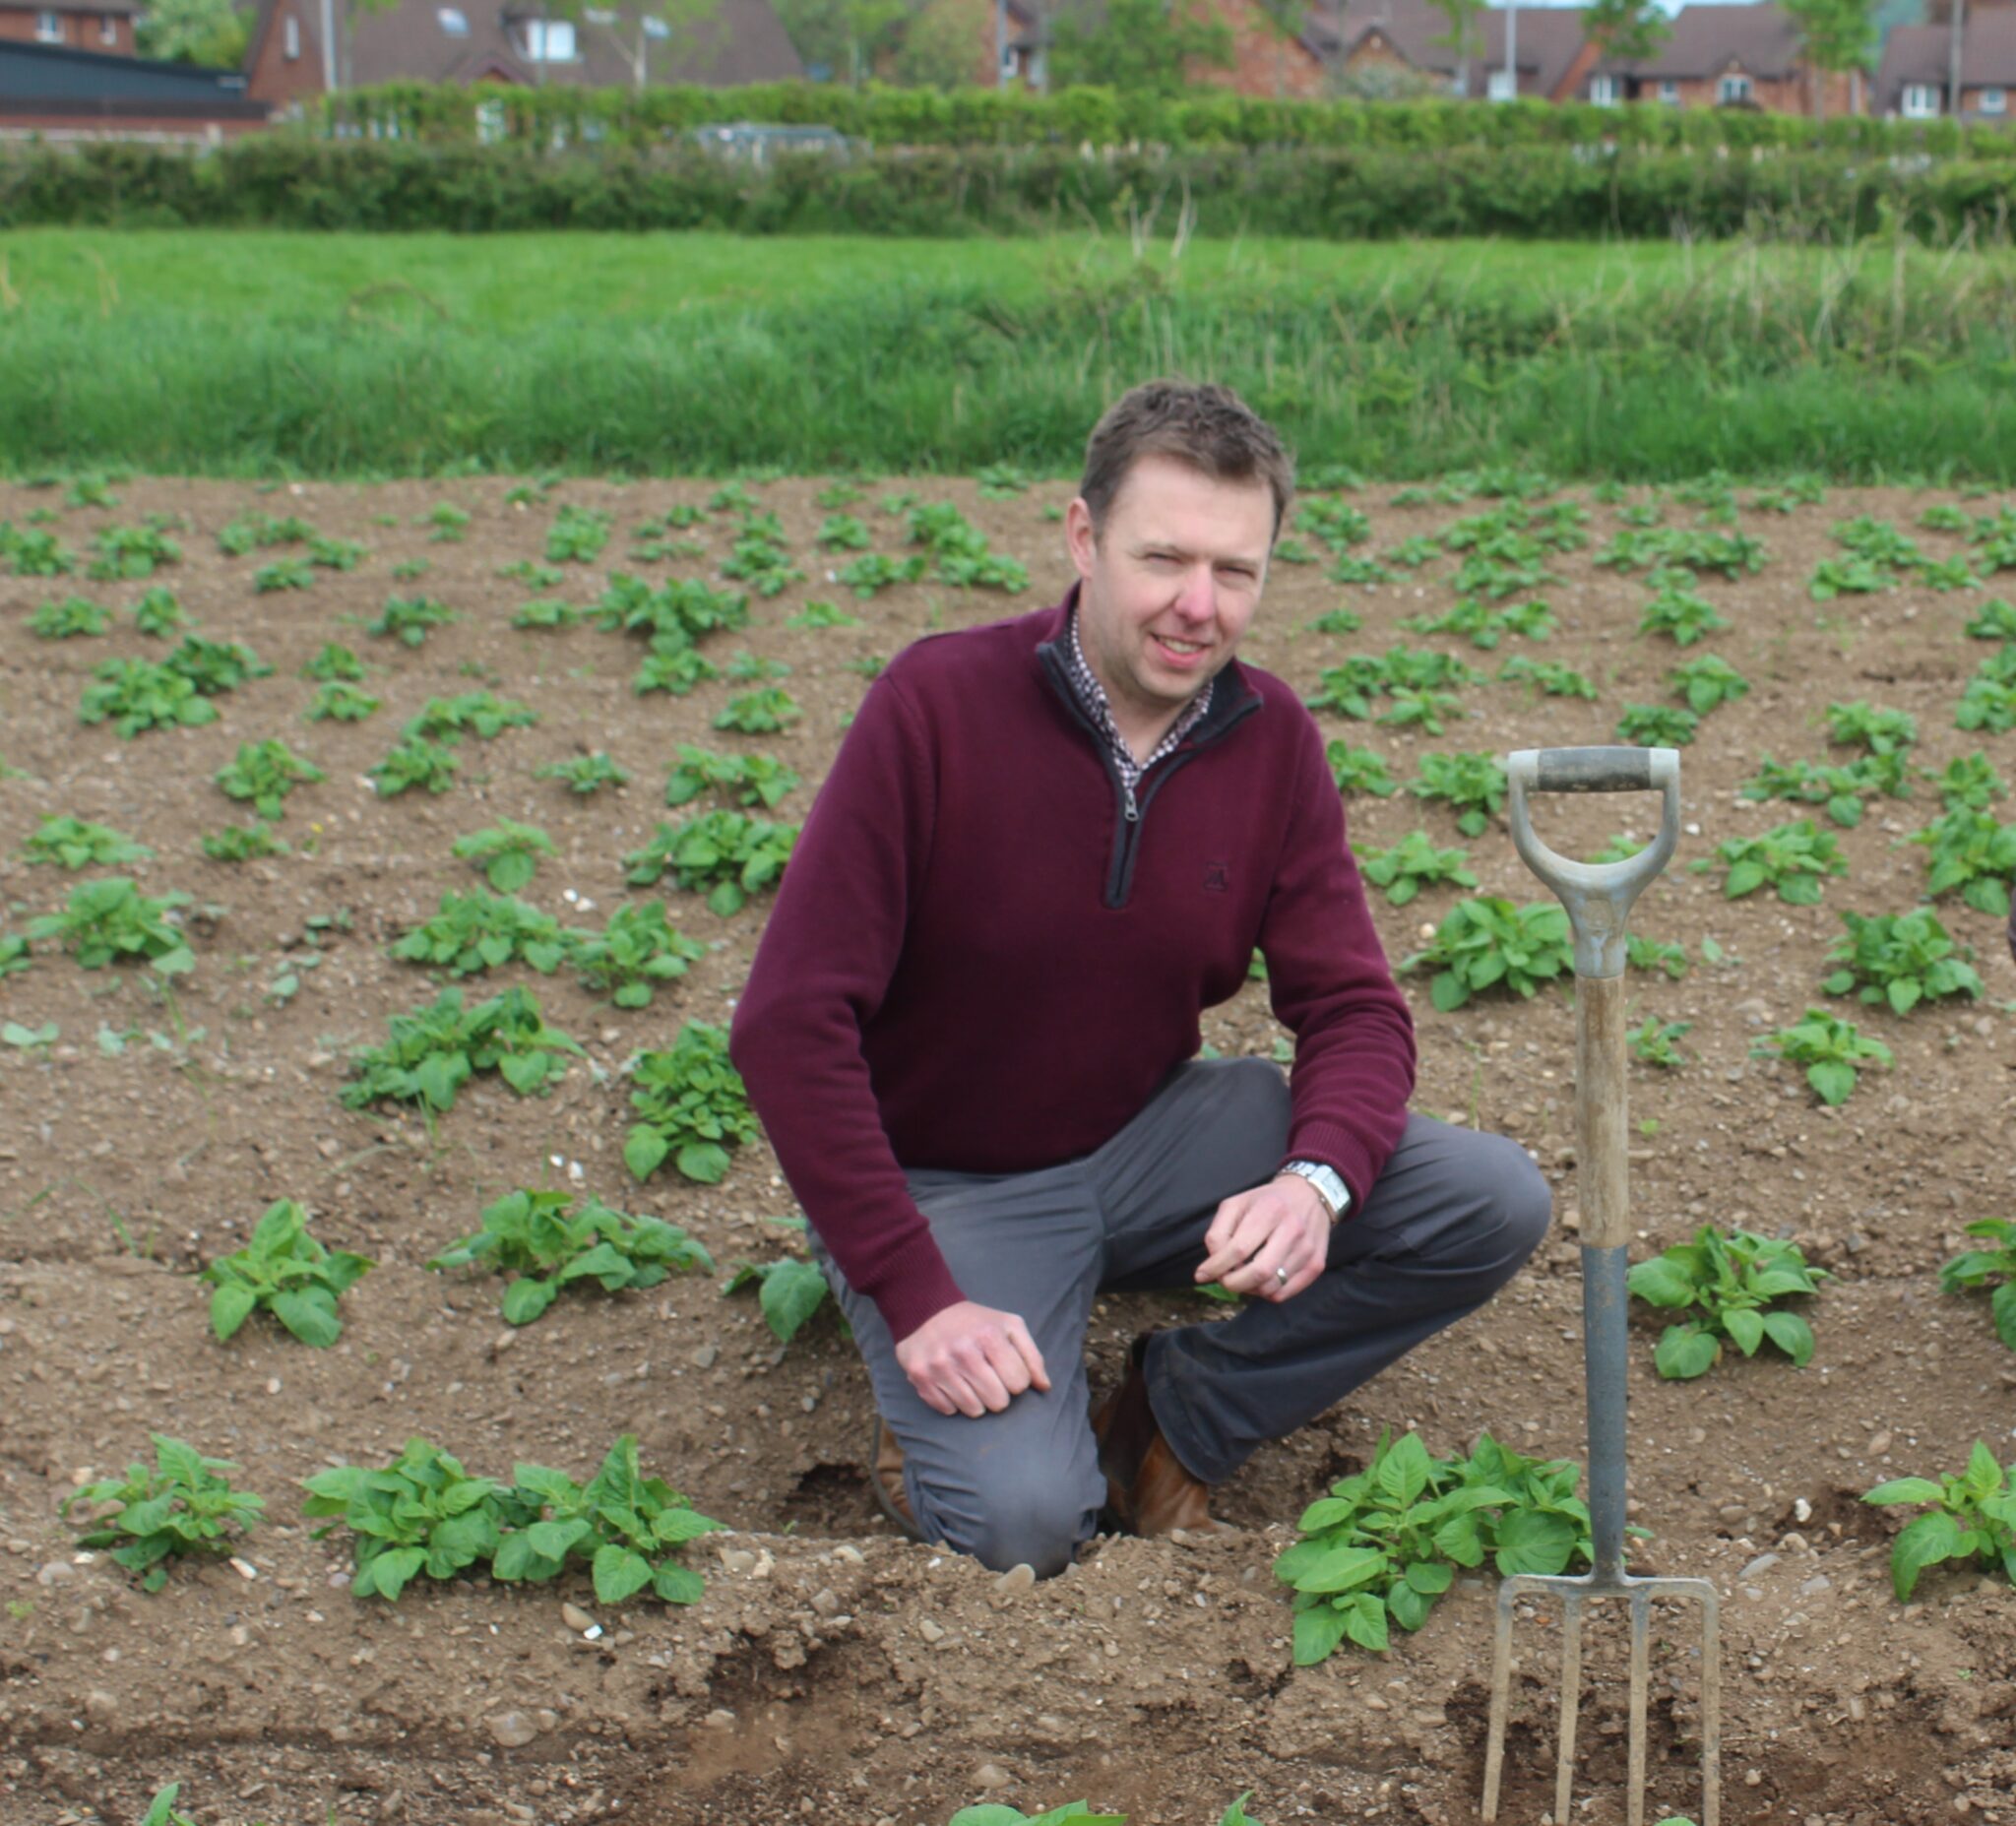 35% of maincrop potato area now planted